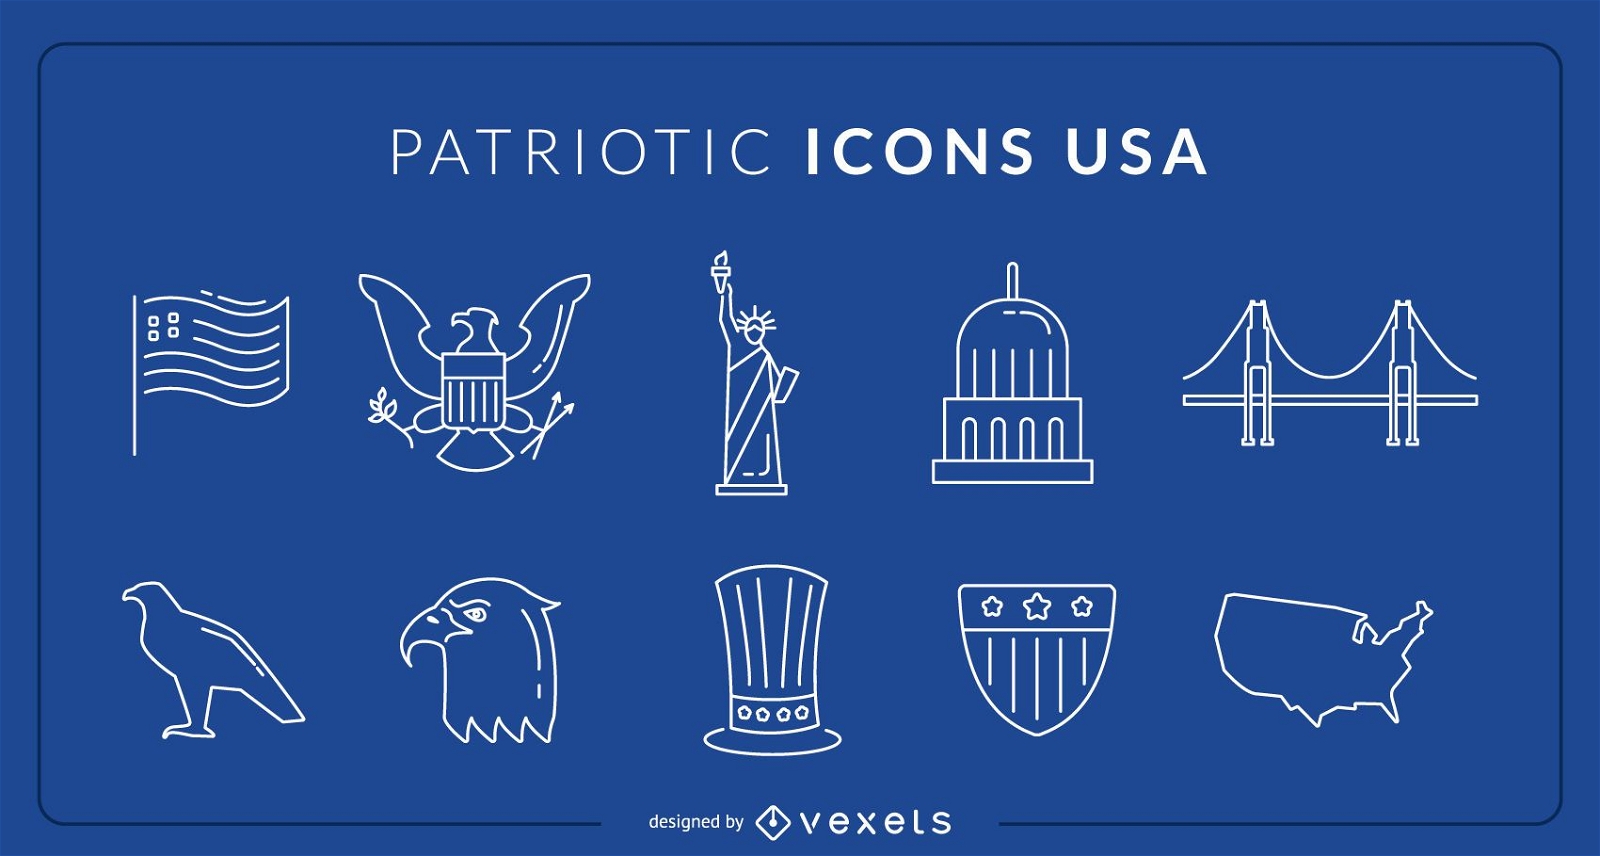 USA Patriotic Icons